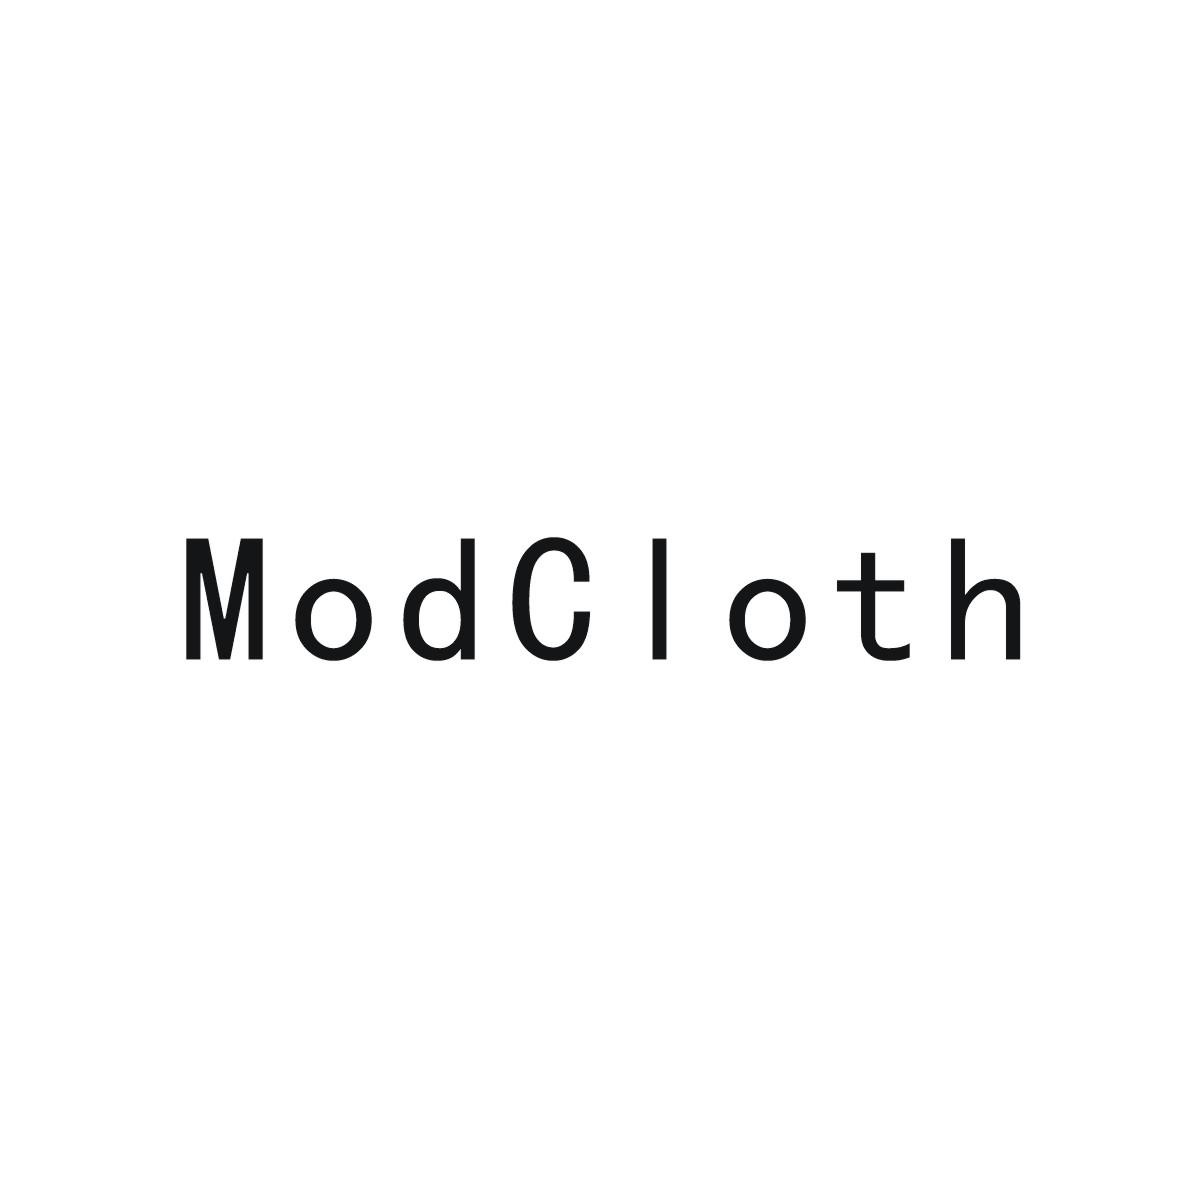 MODCLOTH